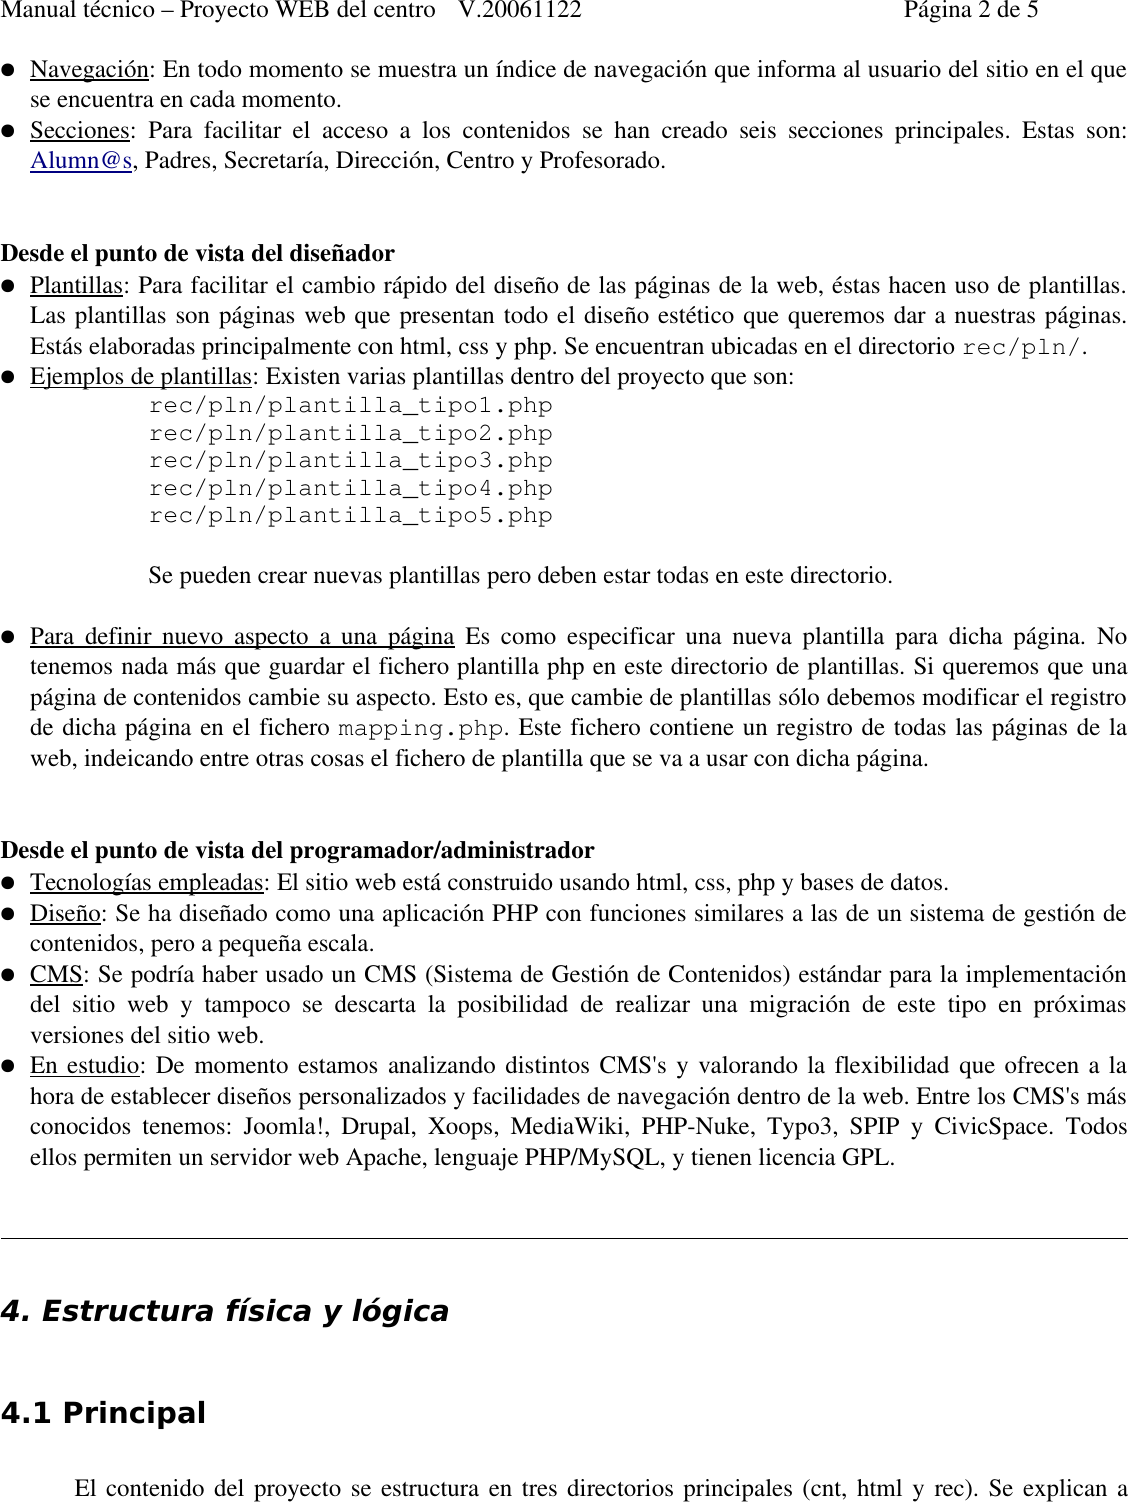 Page 2 of 5 - Manual Tecnico Web